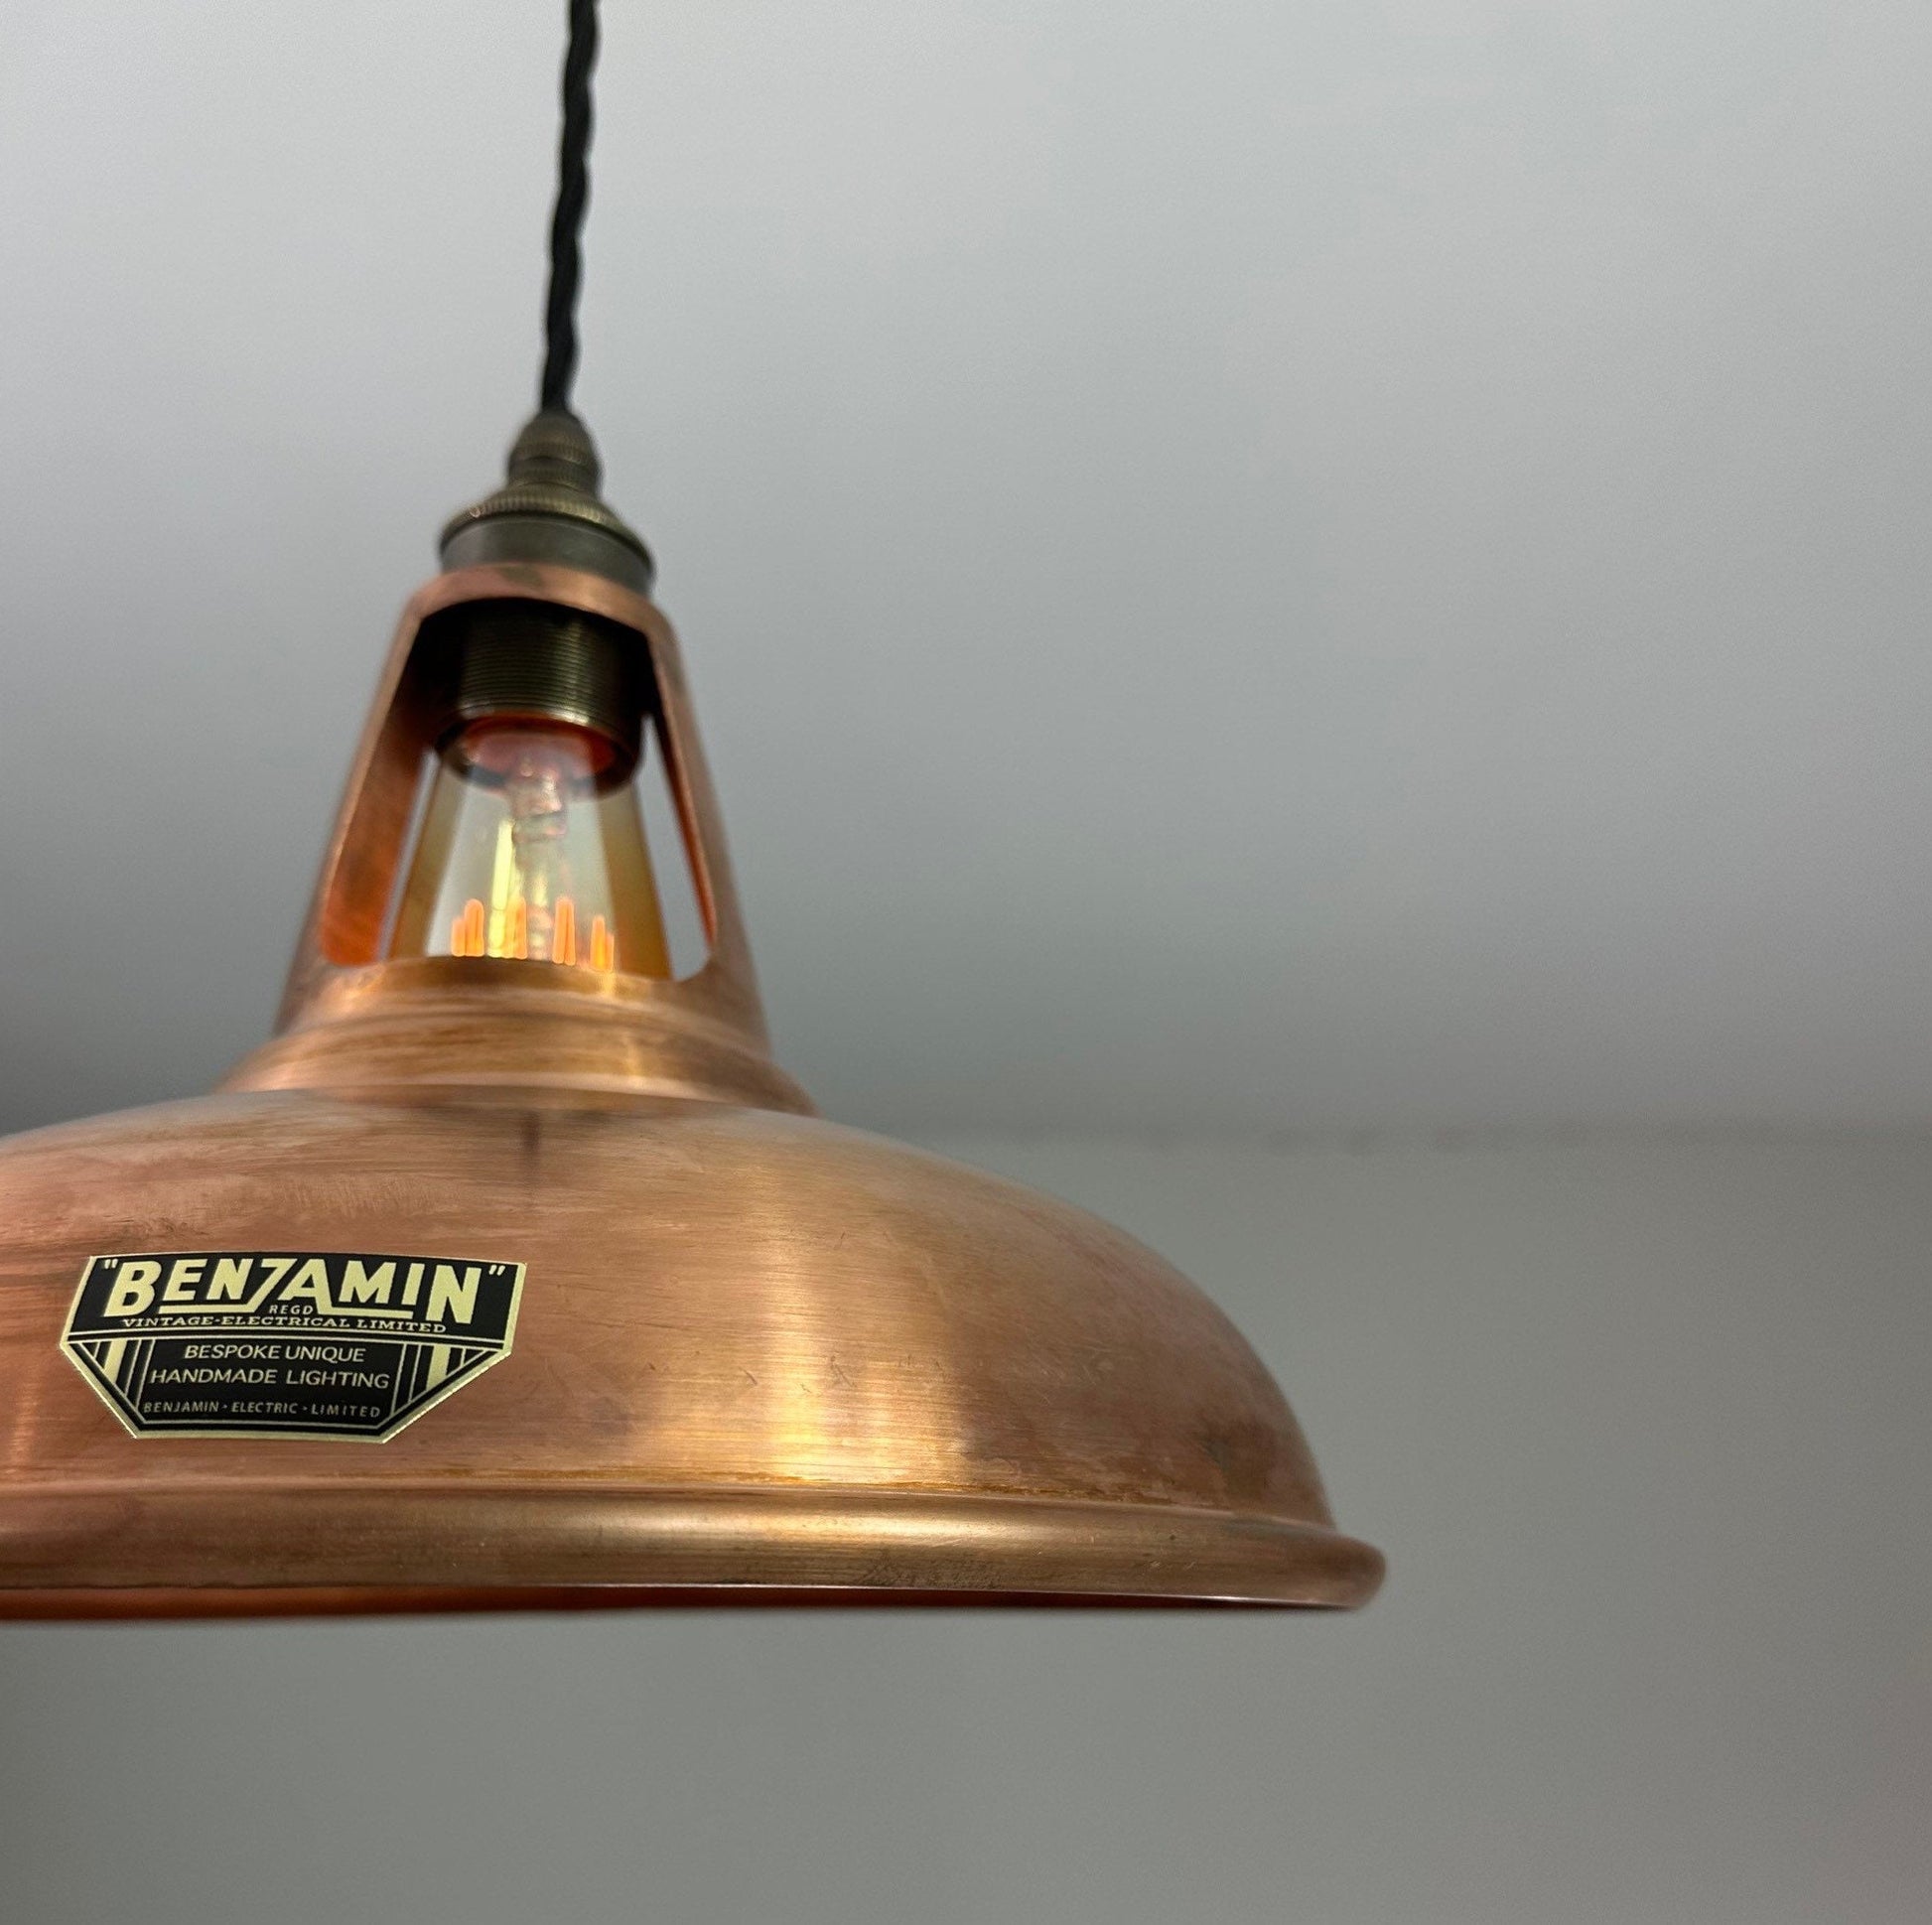 Cawston ~ Antique Copper Shade 1932 Design Pendant Set Light | Ceiling Dining Room | Kitchen Table | Vintage Filament Bulb | 11 Inch